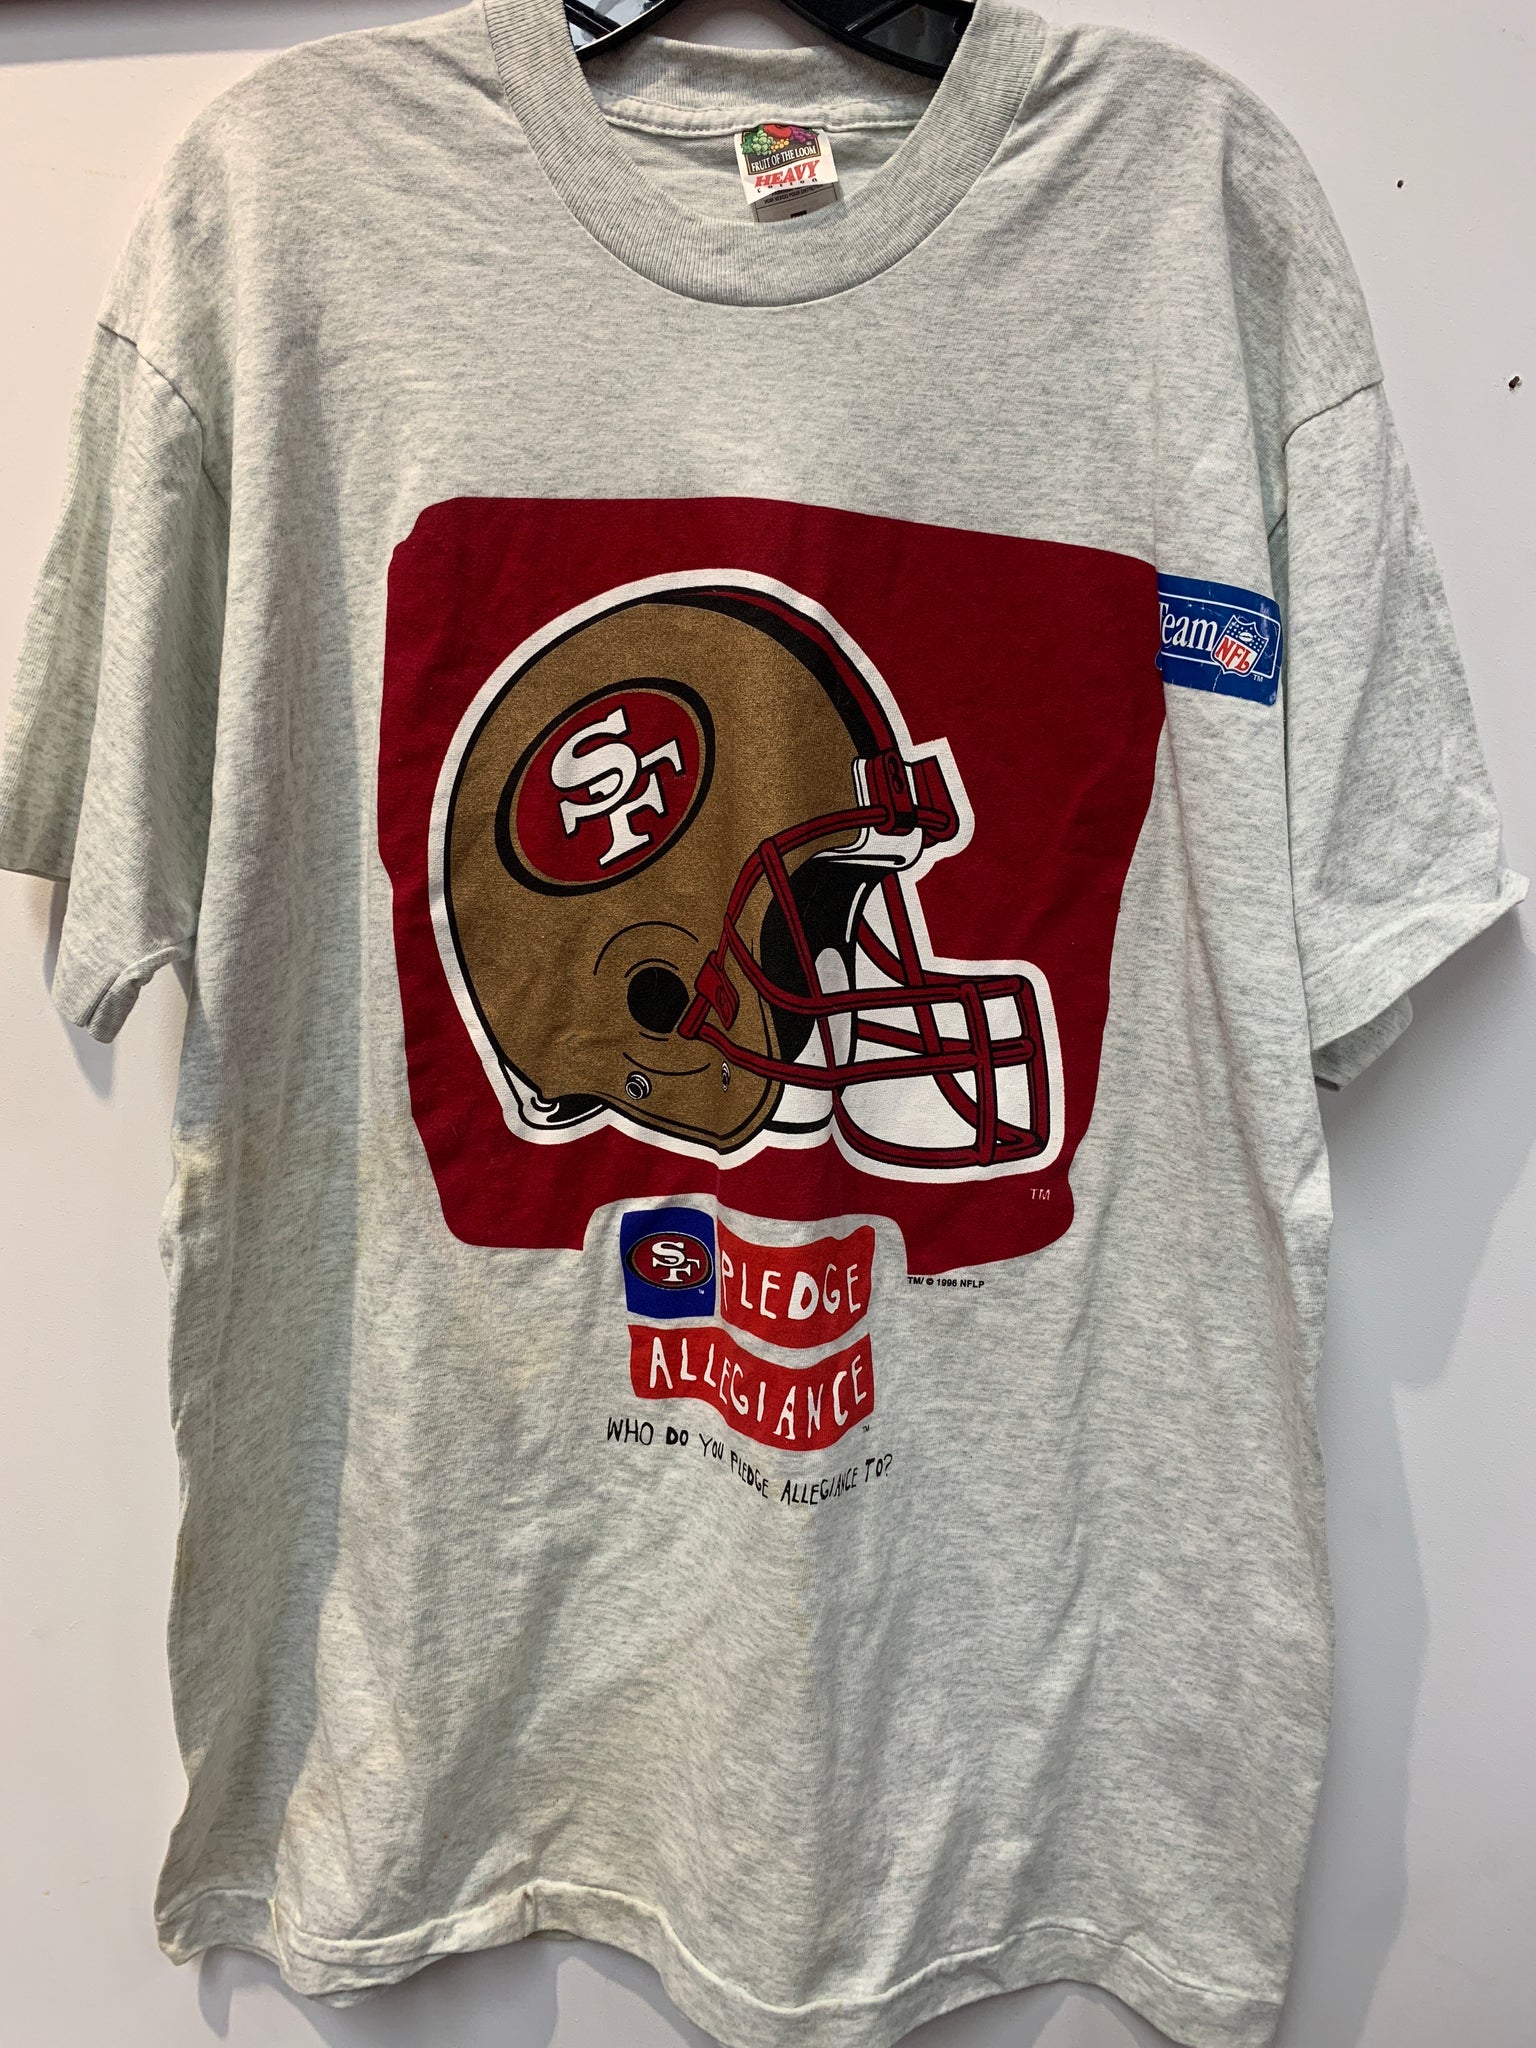 $100 - $150 Grey San Francisco 49ers Clothing.